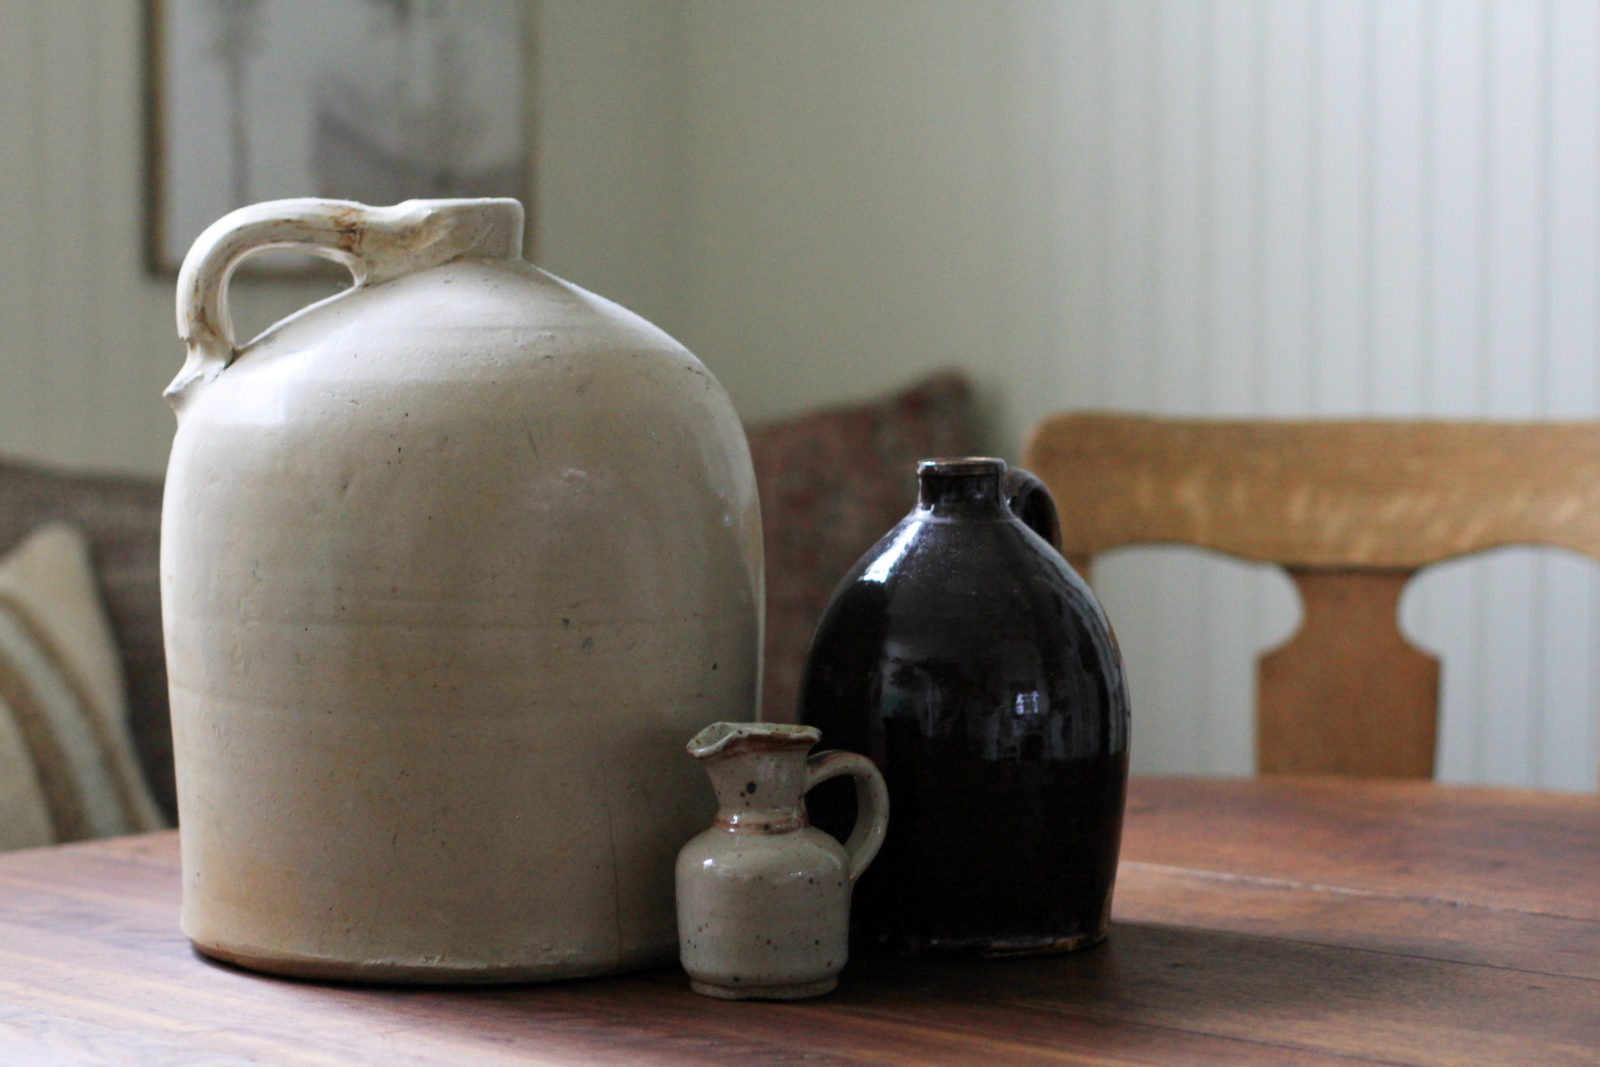 Vintage jugs styled on a vintage wooden dropleaf table.